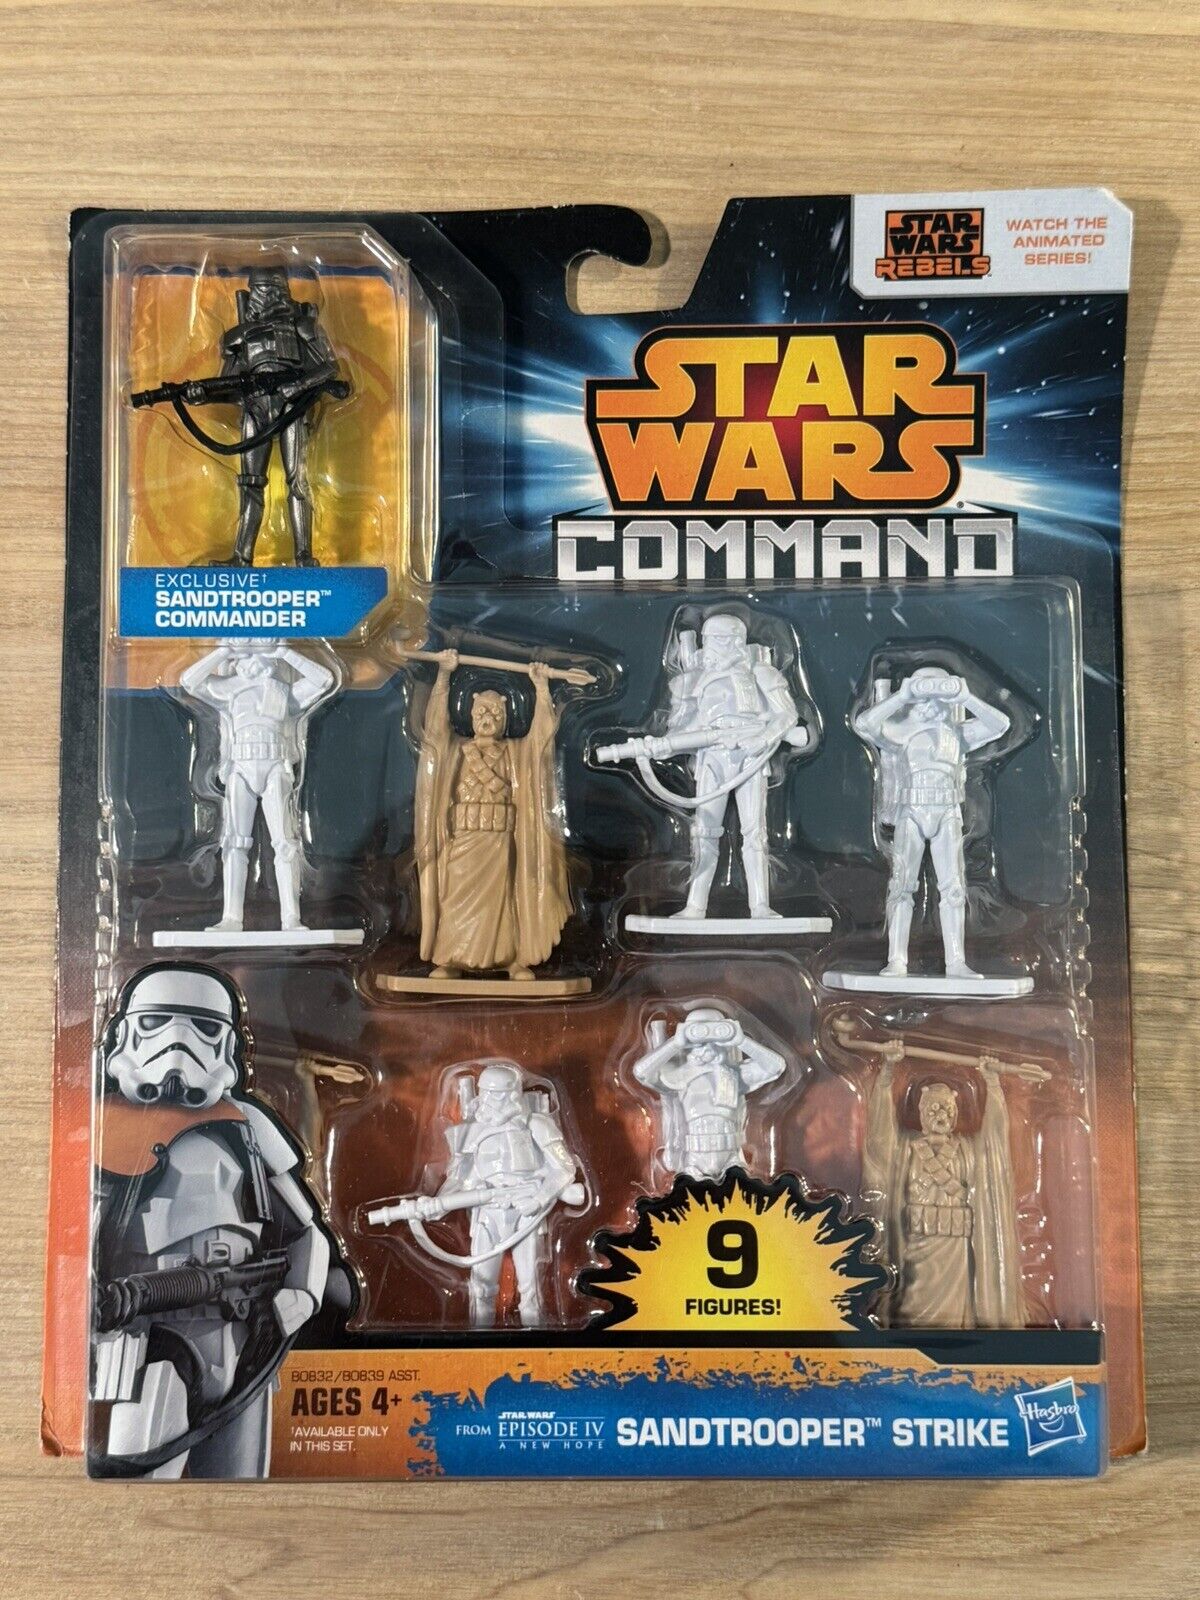 2014 Star Wars Command: Sandtrooper Strike 9 Figures - Exclusive Sandtrooper